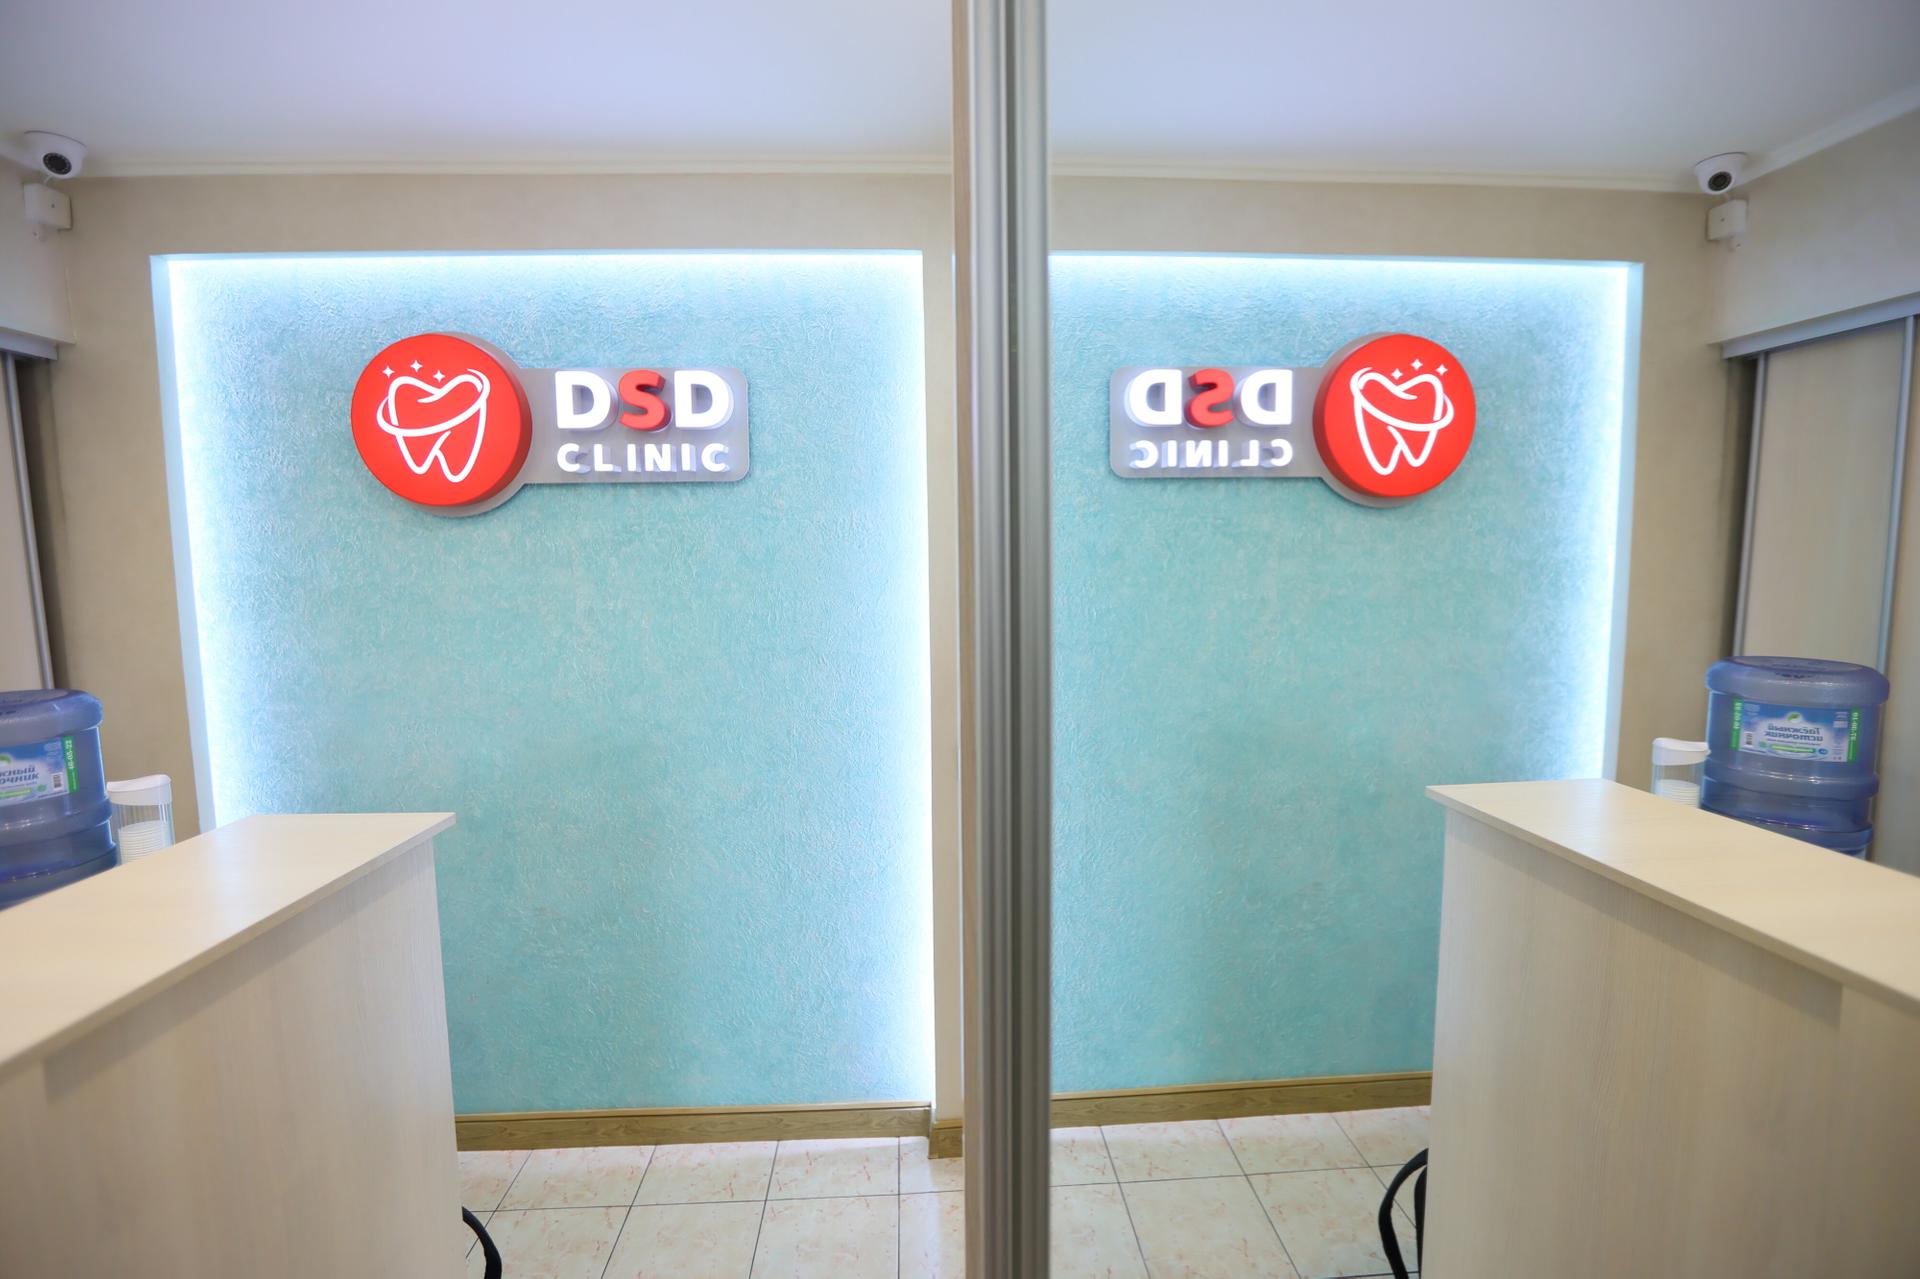 Сиб клиник. DSD Clinic Улан-Удэ. DSD Clinic Улан-Удэ Боевая 12. Арт клиник Улан Удэ логотип. Сиб клиник Улан Удэ.